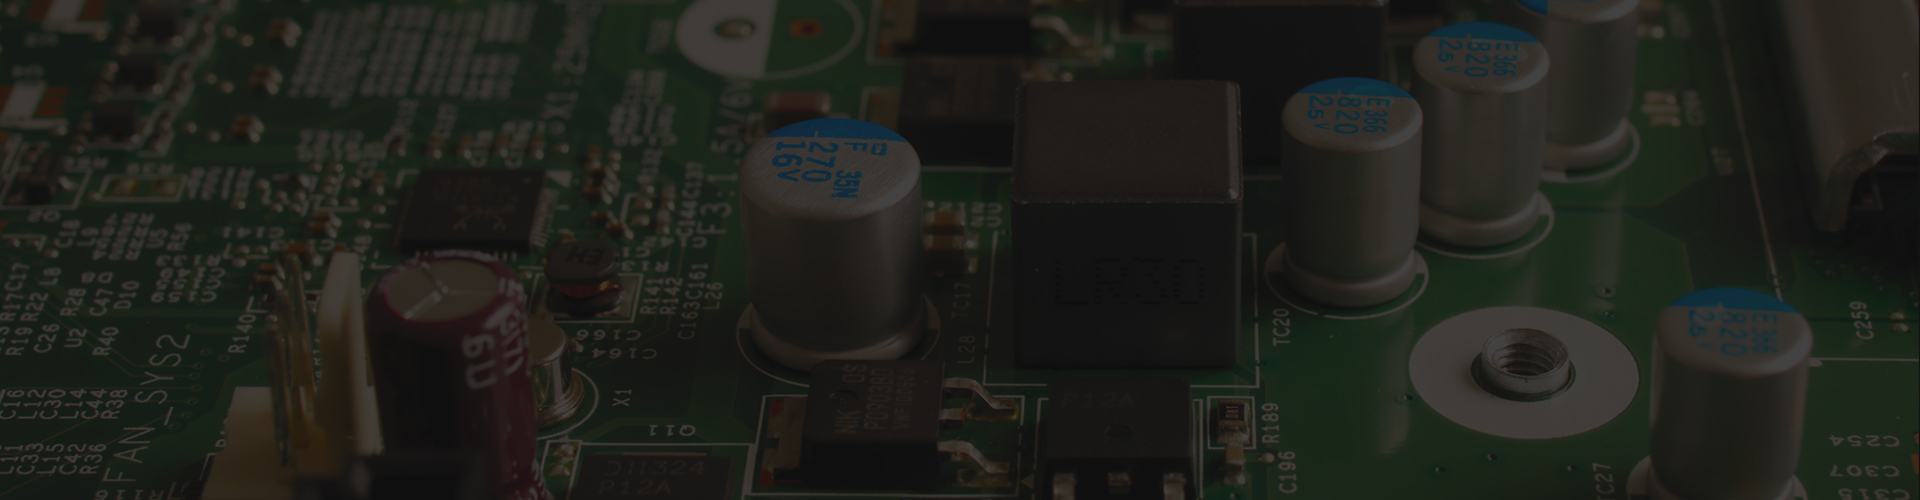 FPGA Engineering Service